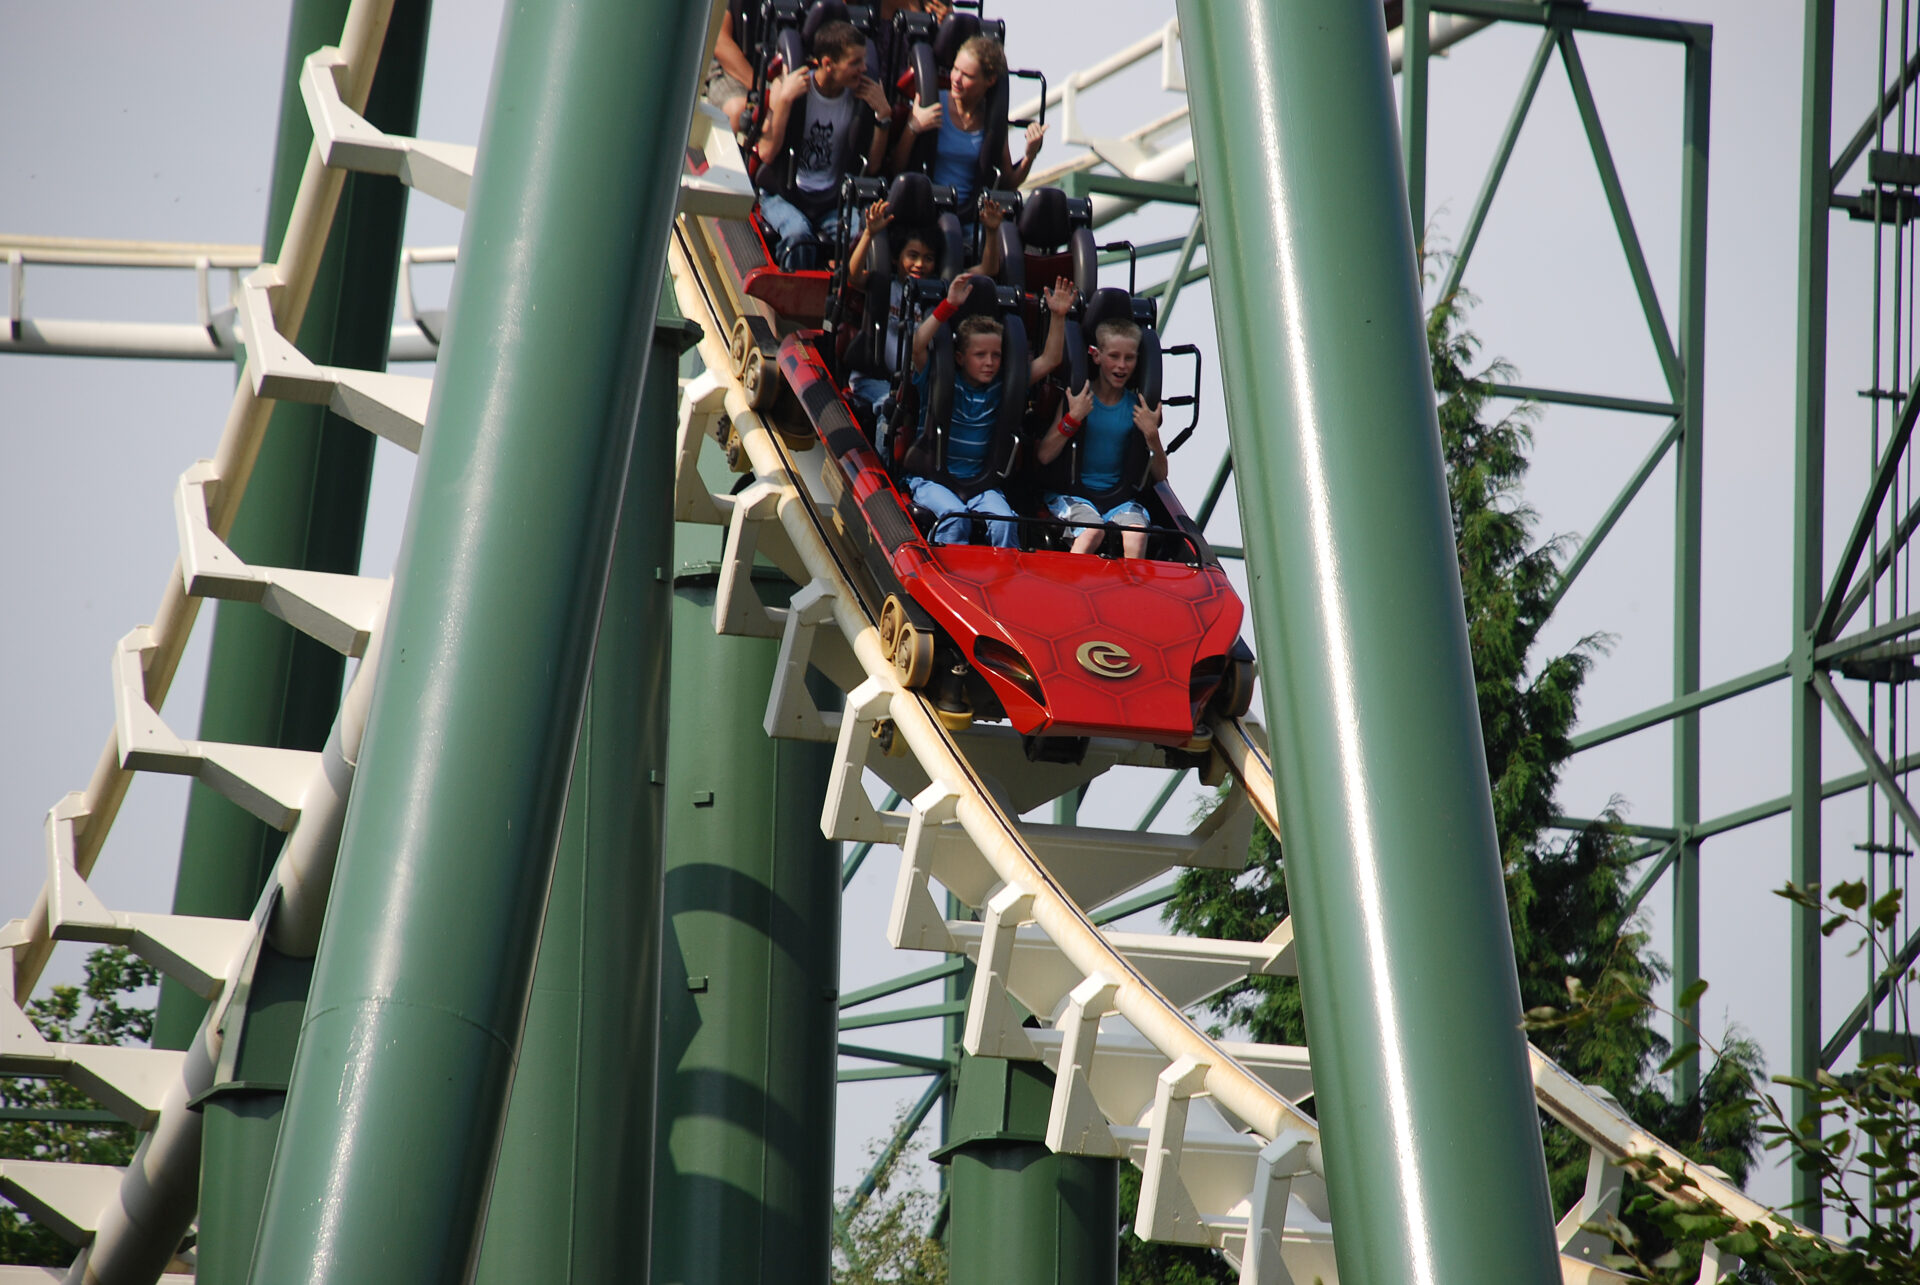 Efteling Kaatsheuvel Netherlands amusement park Python rollercoaster themepark 14